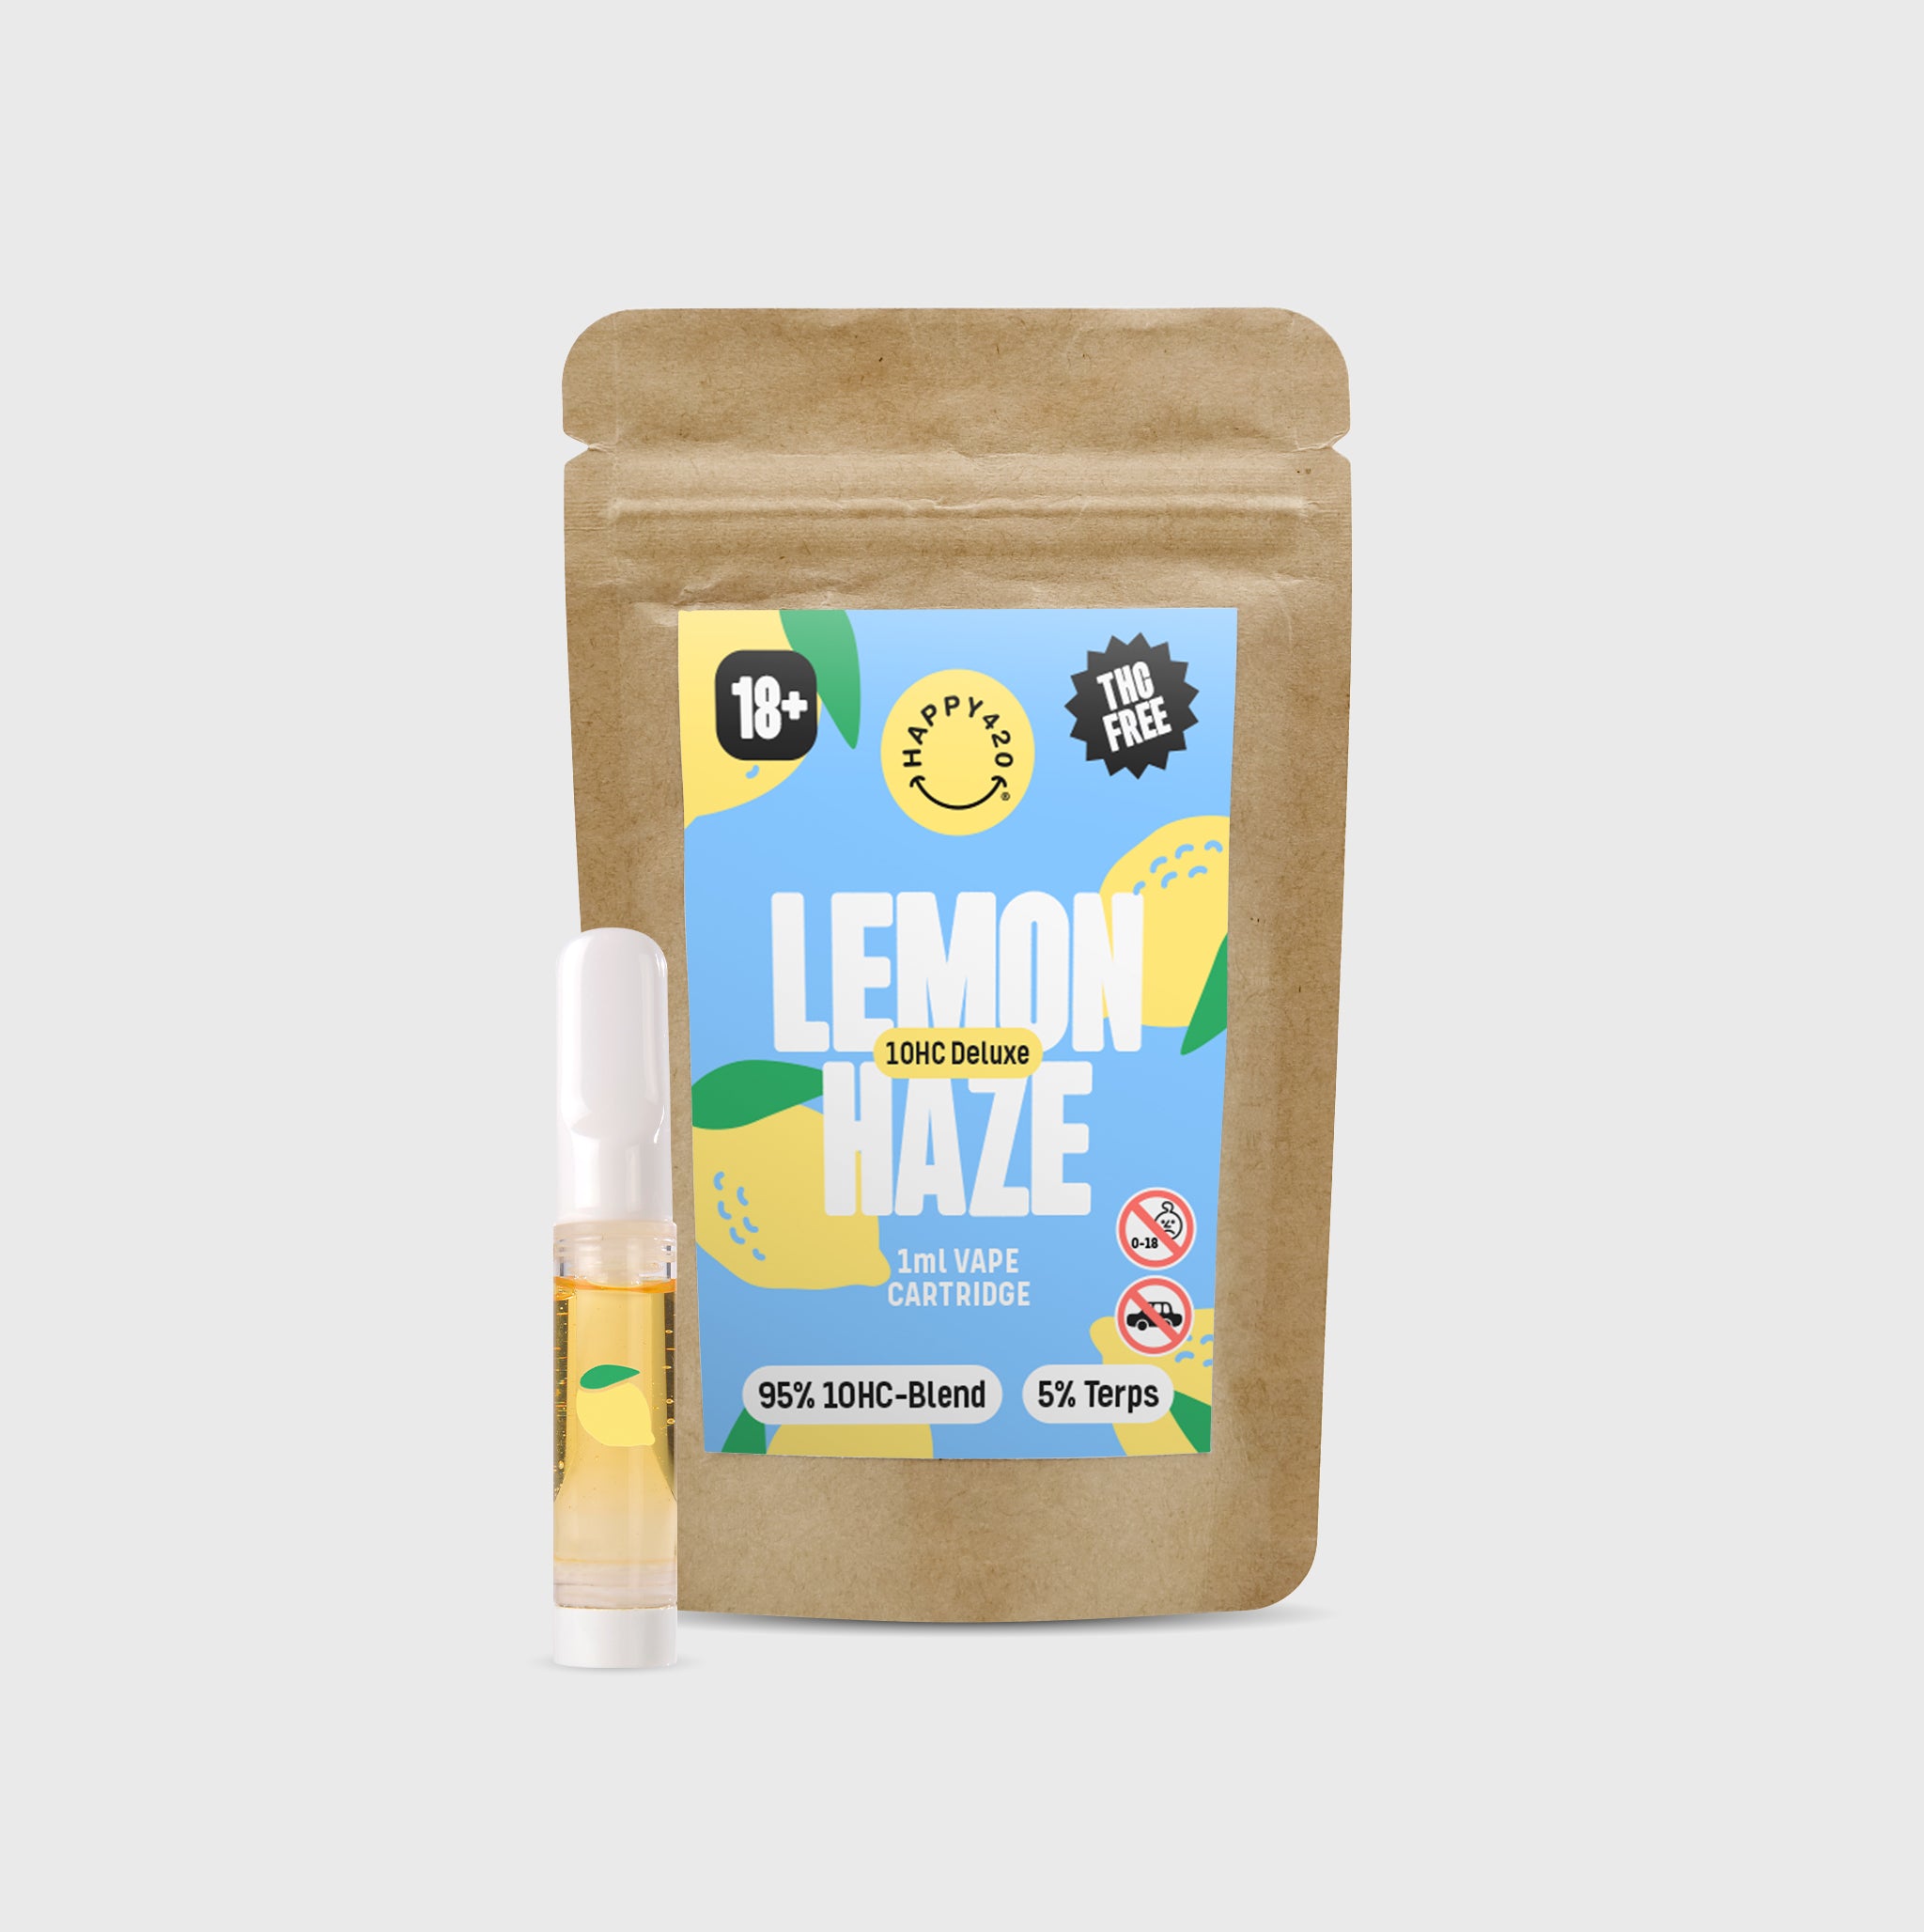 NEU! 10HC Deluxe Lemon Haze 🍋